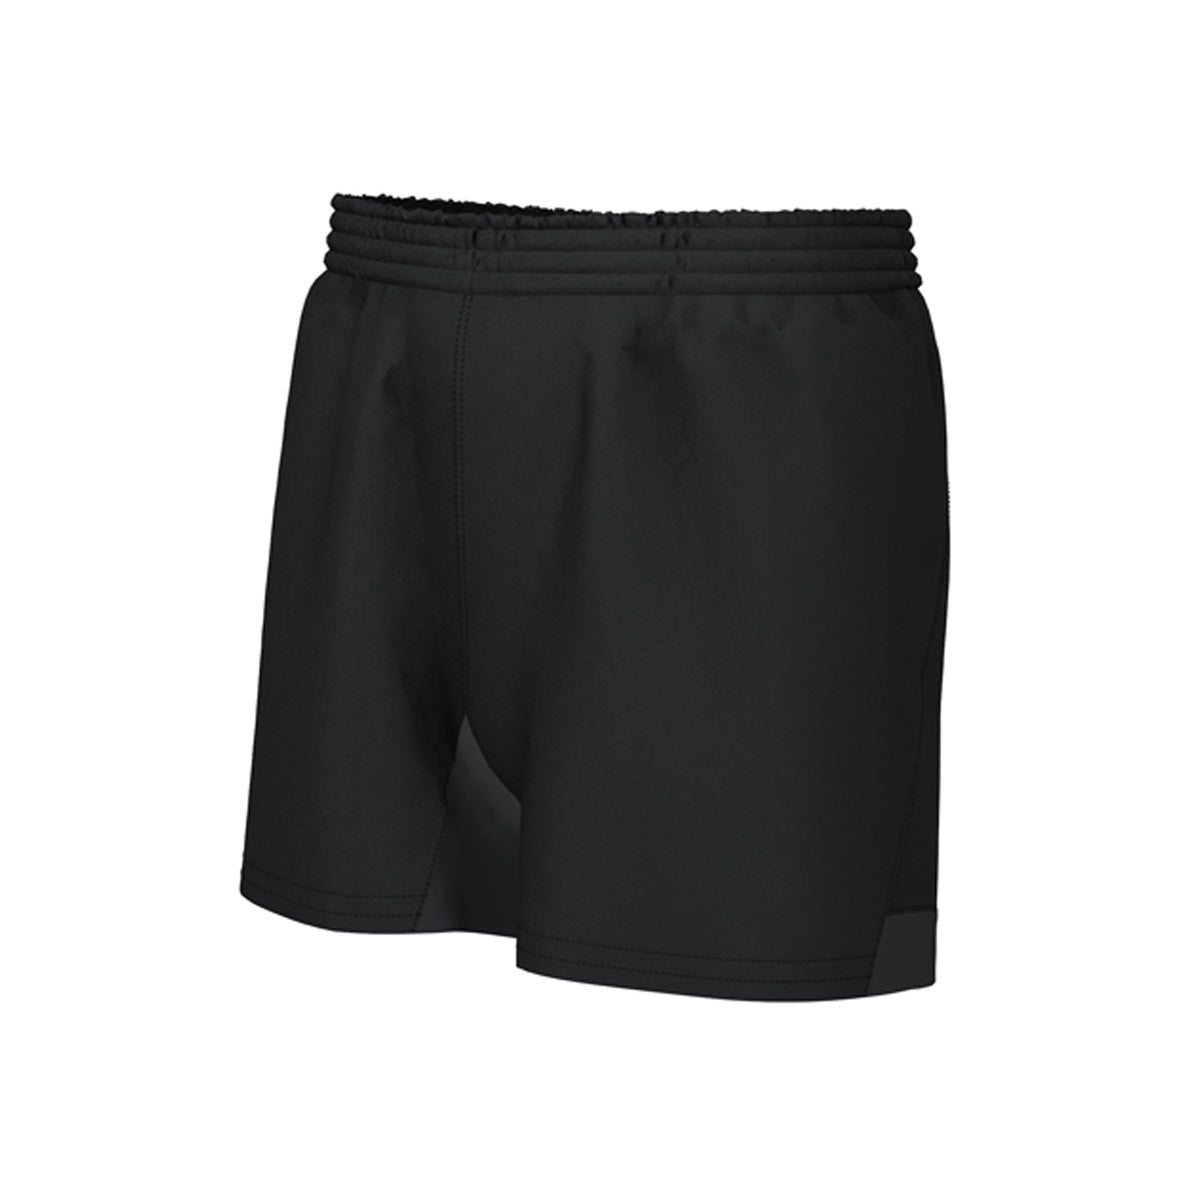 Piranha Rugby Shorts: Black